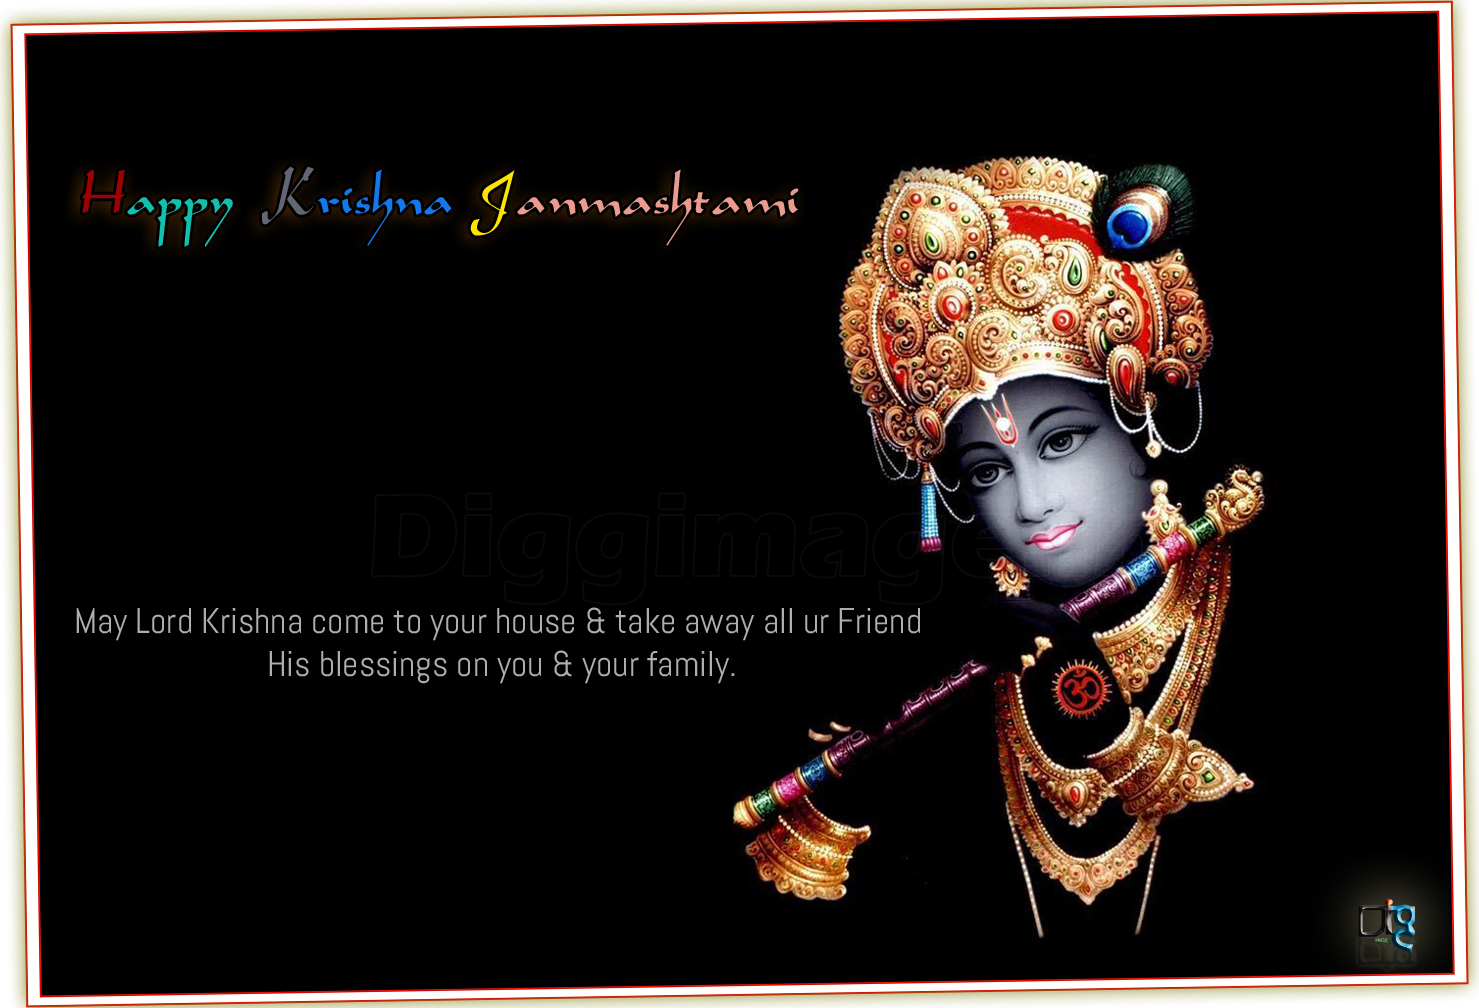 Happy Krishna Ashtami Greetings May Lord Krishna come to your house